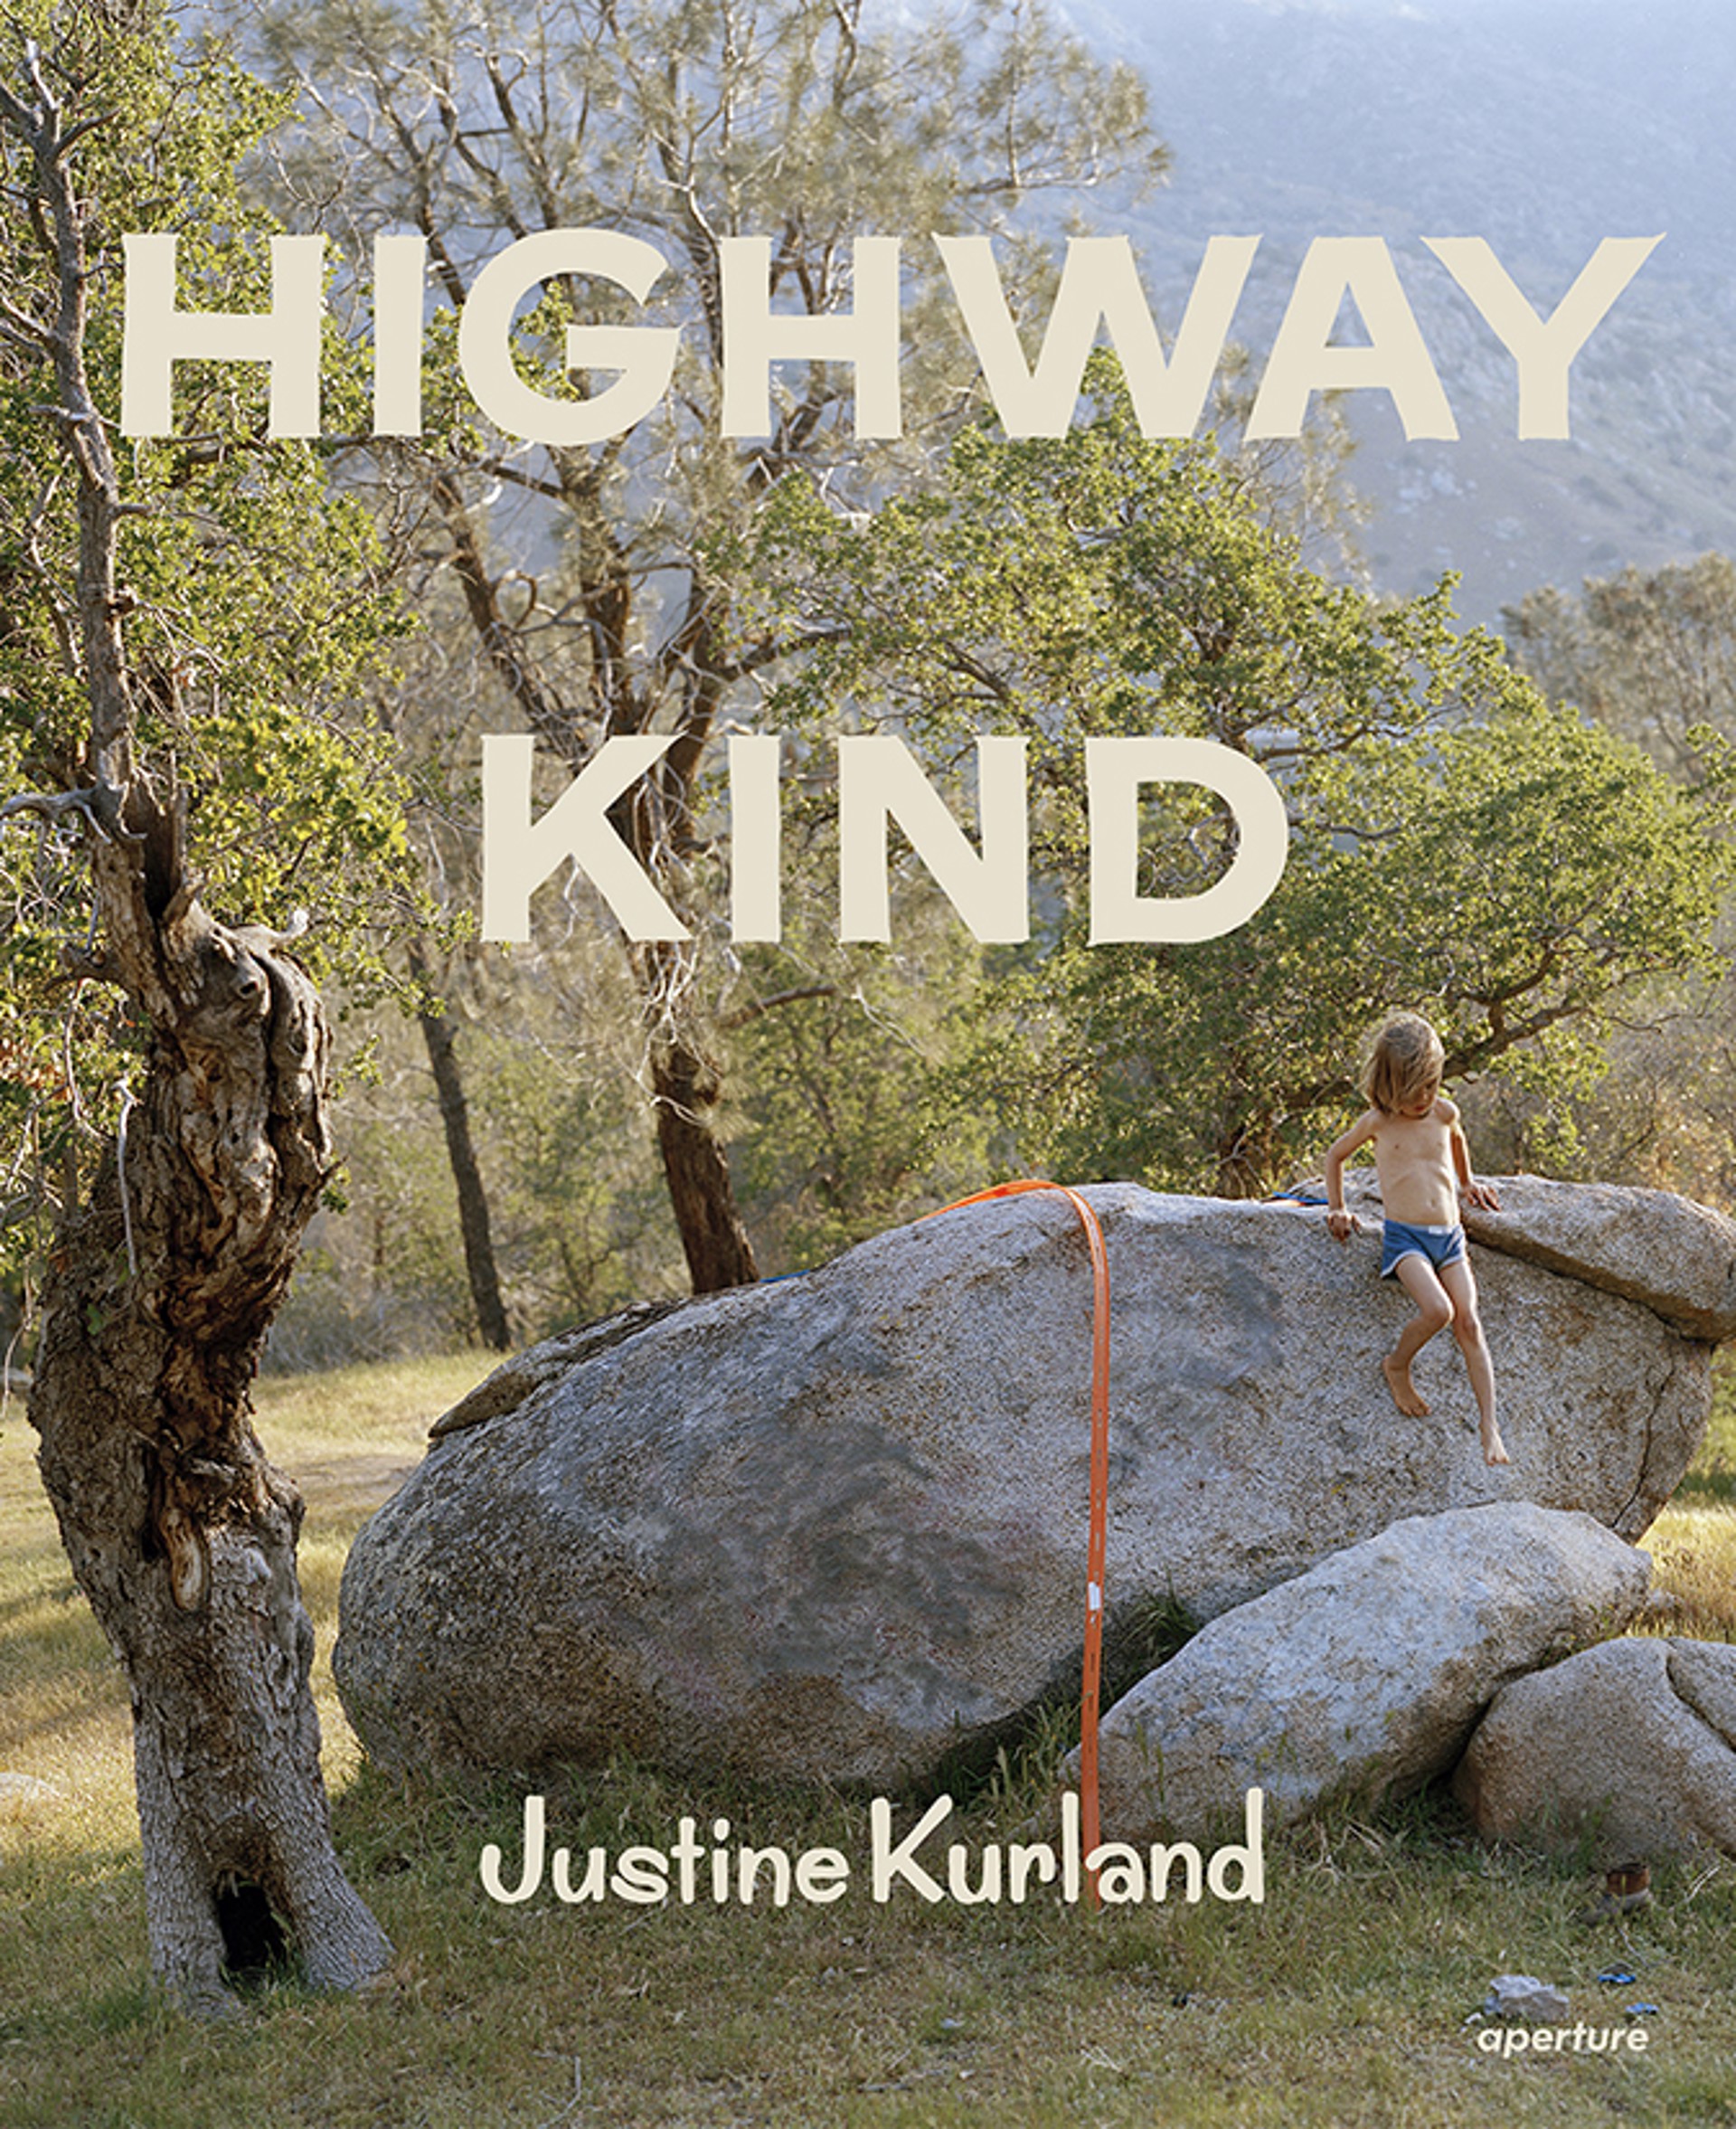 Highway Kind | Justine Kurland by Aperture